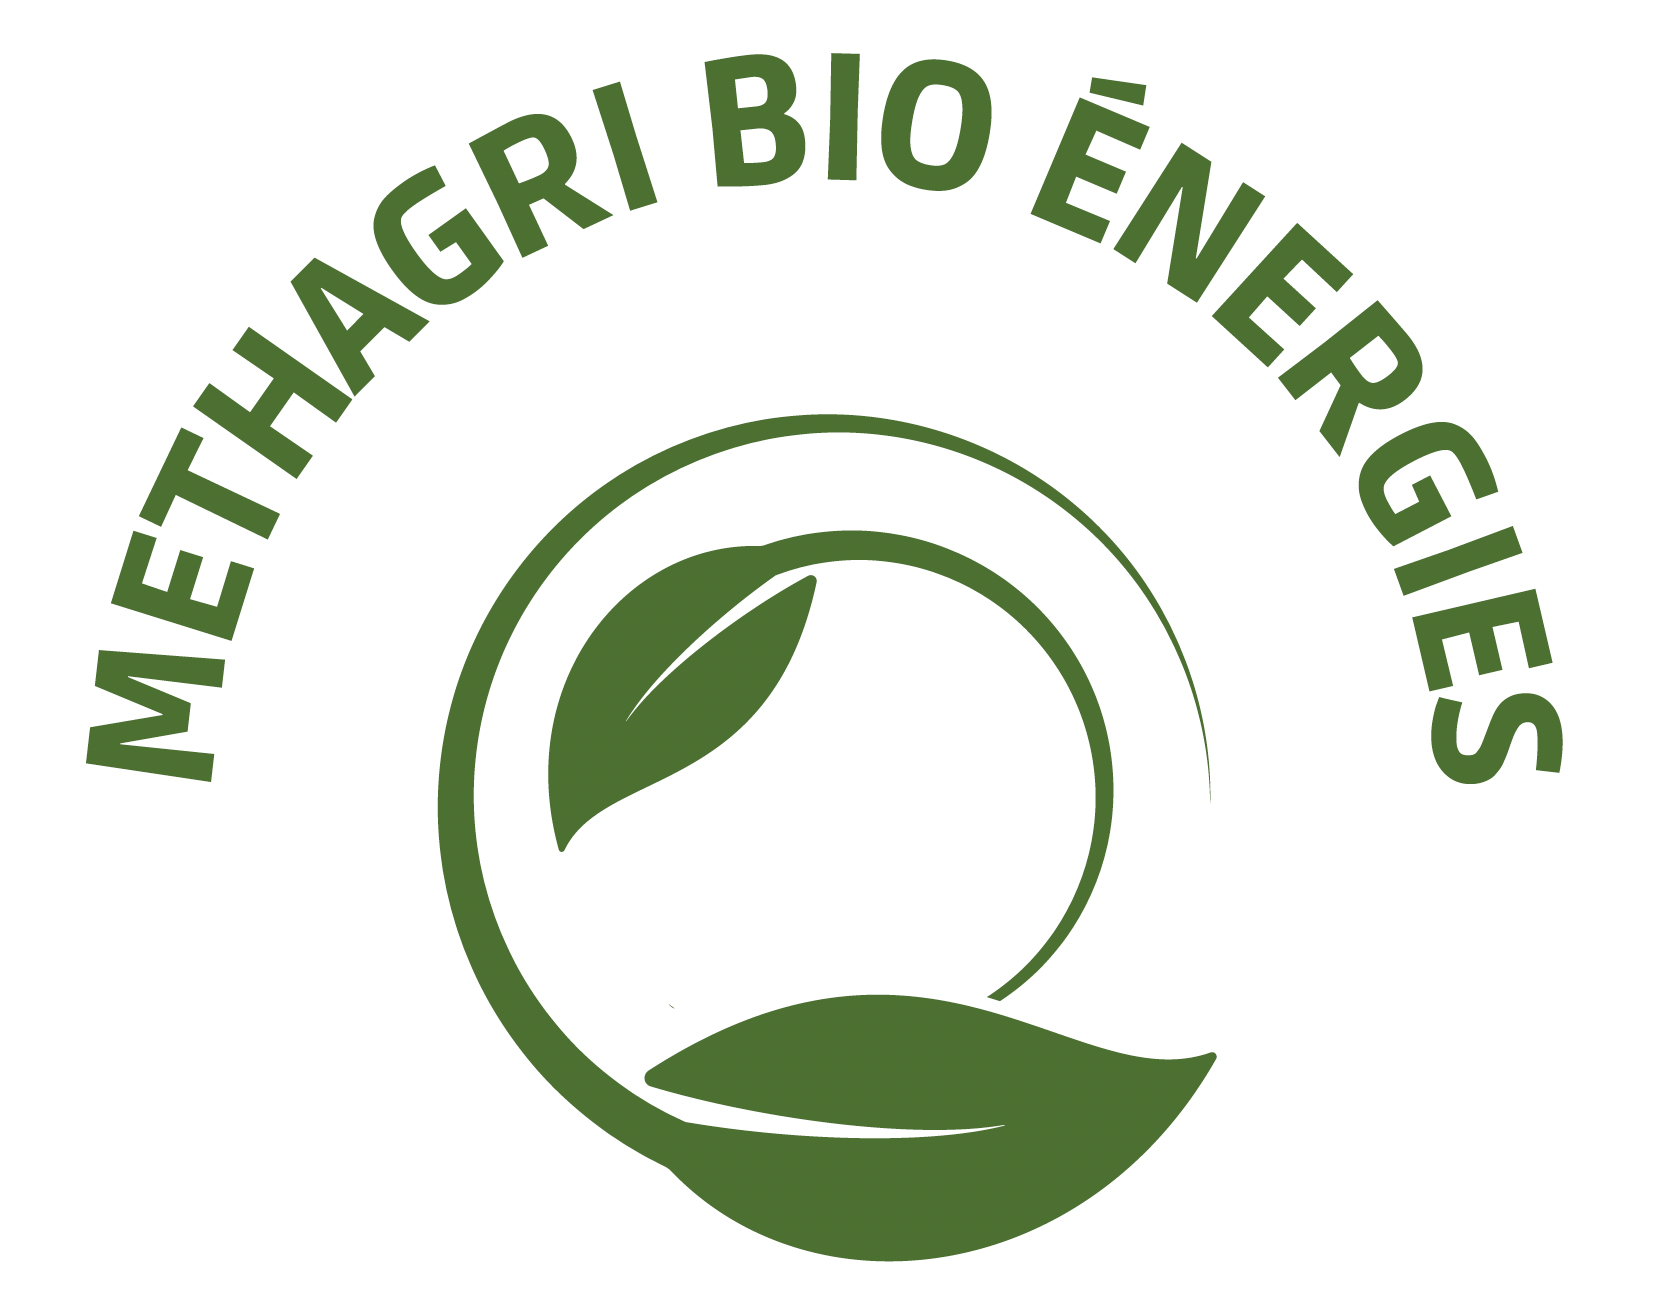 Méthagri Bio Energies